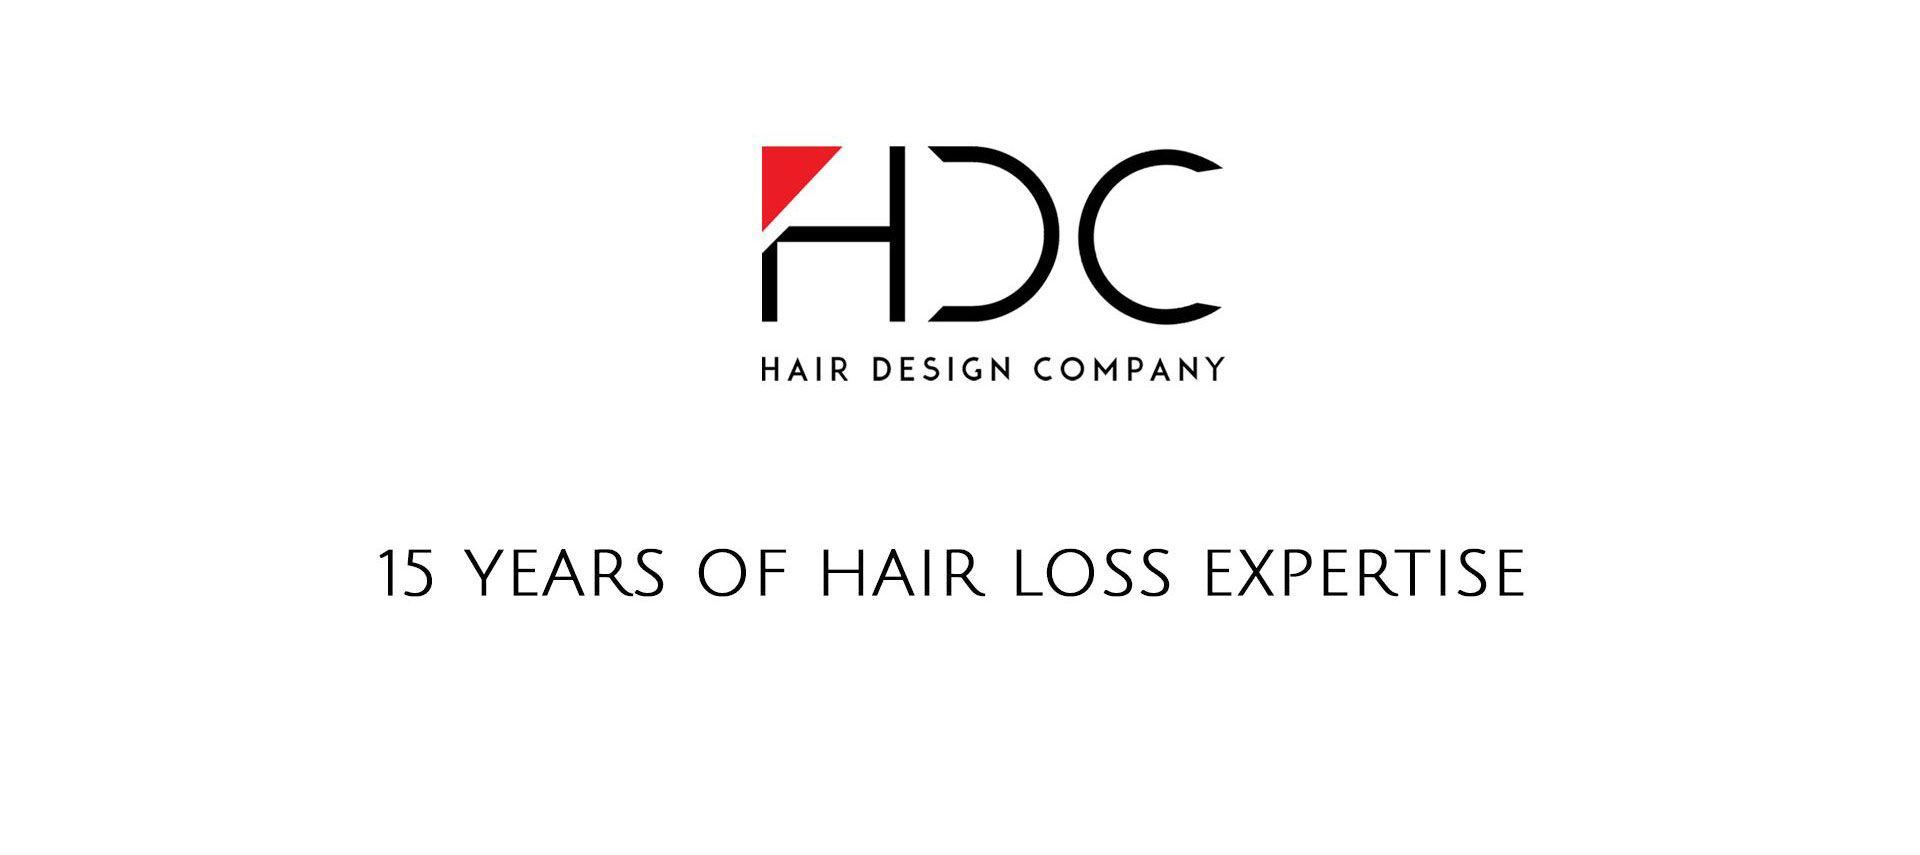 HDC Logo - hdc-logo-slider-image-1 | Hair Design Company | Hair Loss Specialists